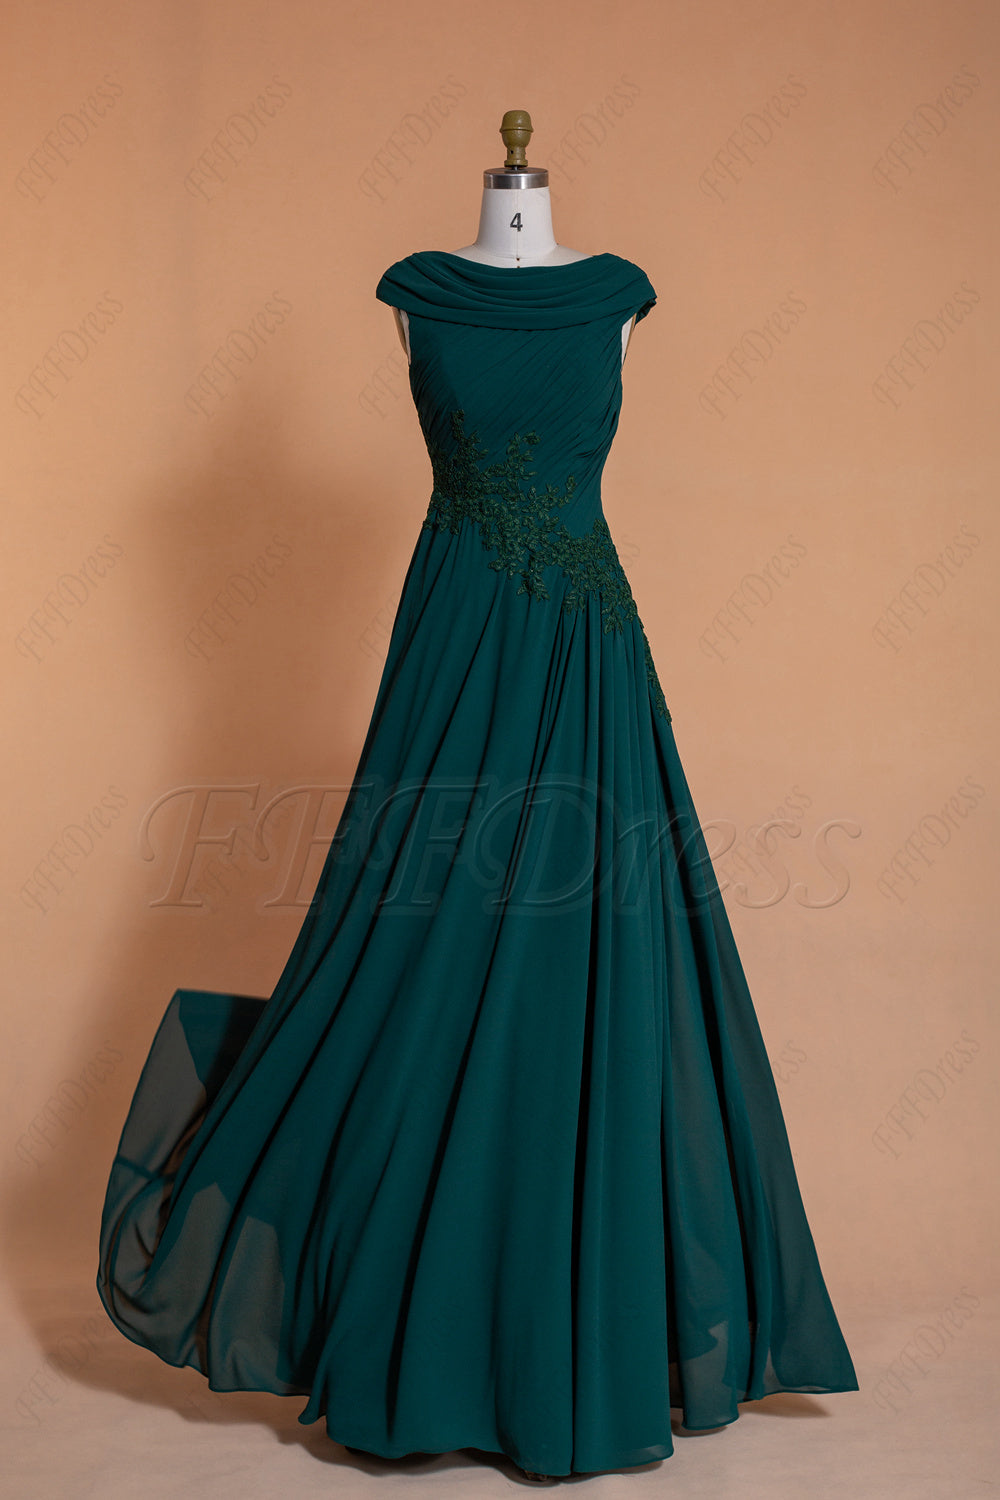 Modest dark emerald bridesmaid dresses cowl neck